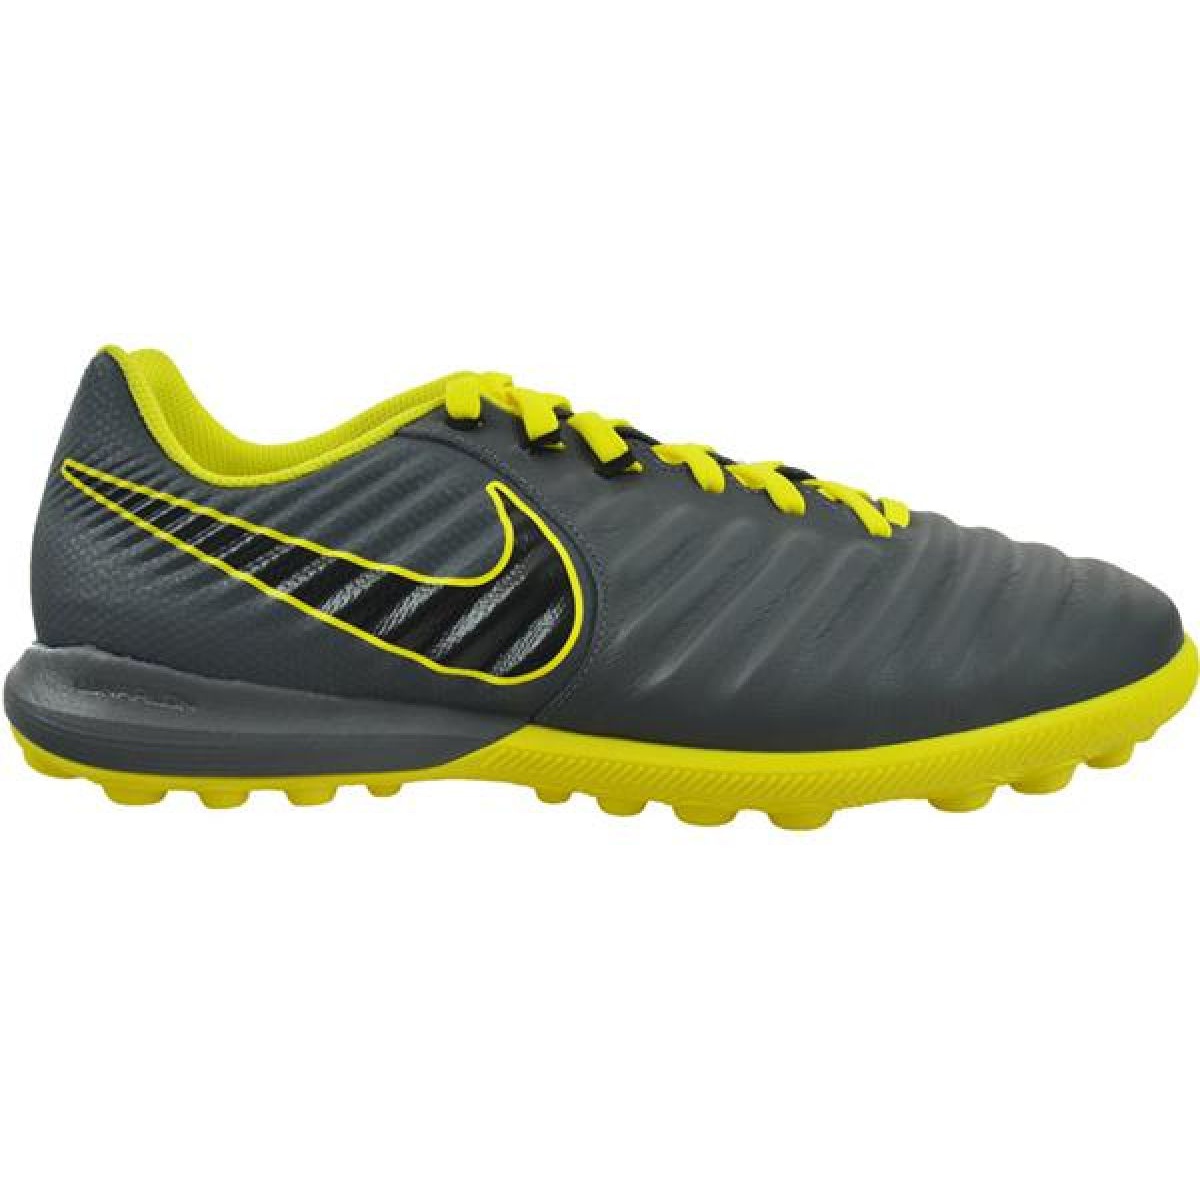 Football boots Nike Tiempo Lunar Legend X7 Pro Tf M AH7249-070 black grey -  ButyModne.pl